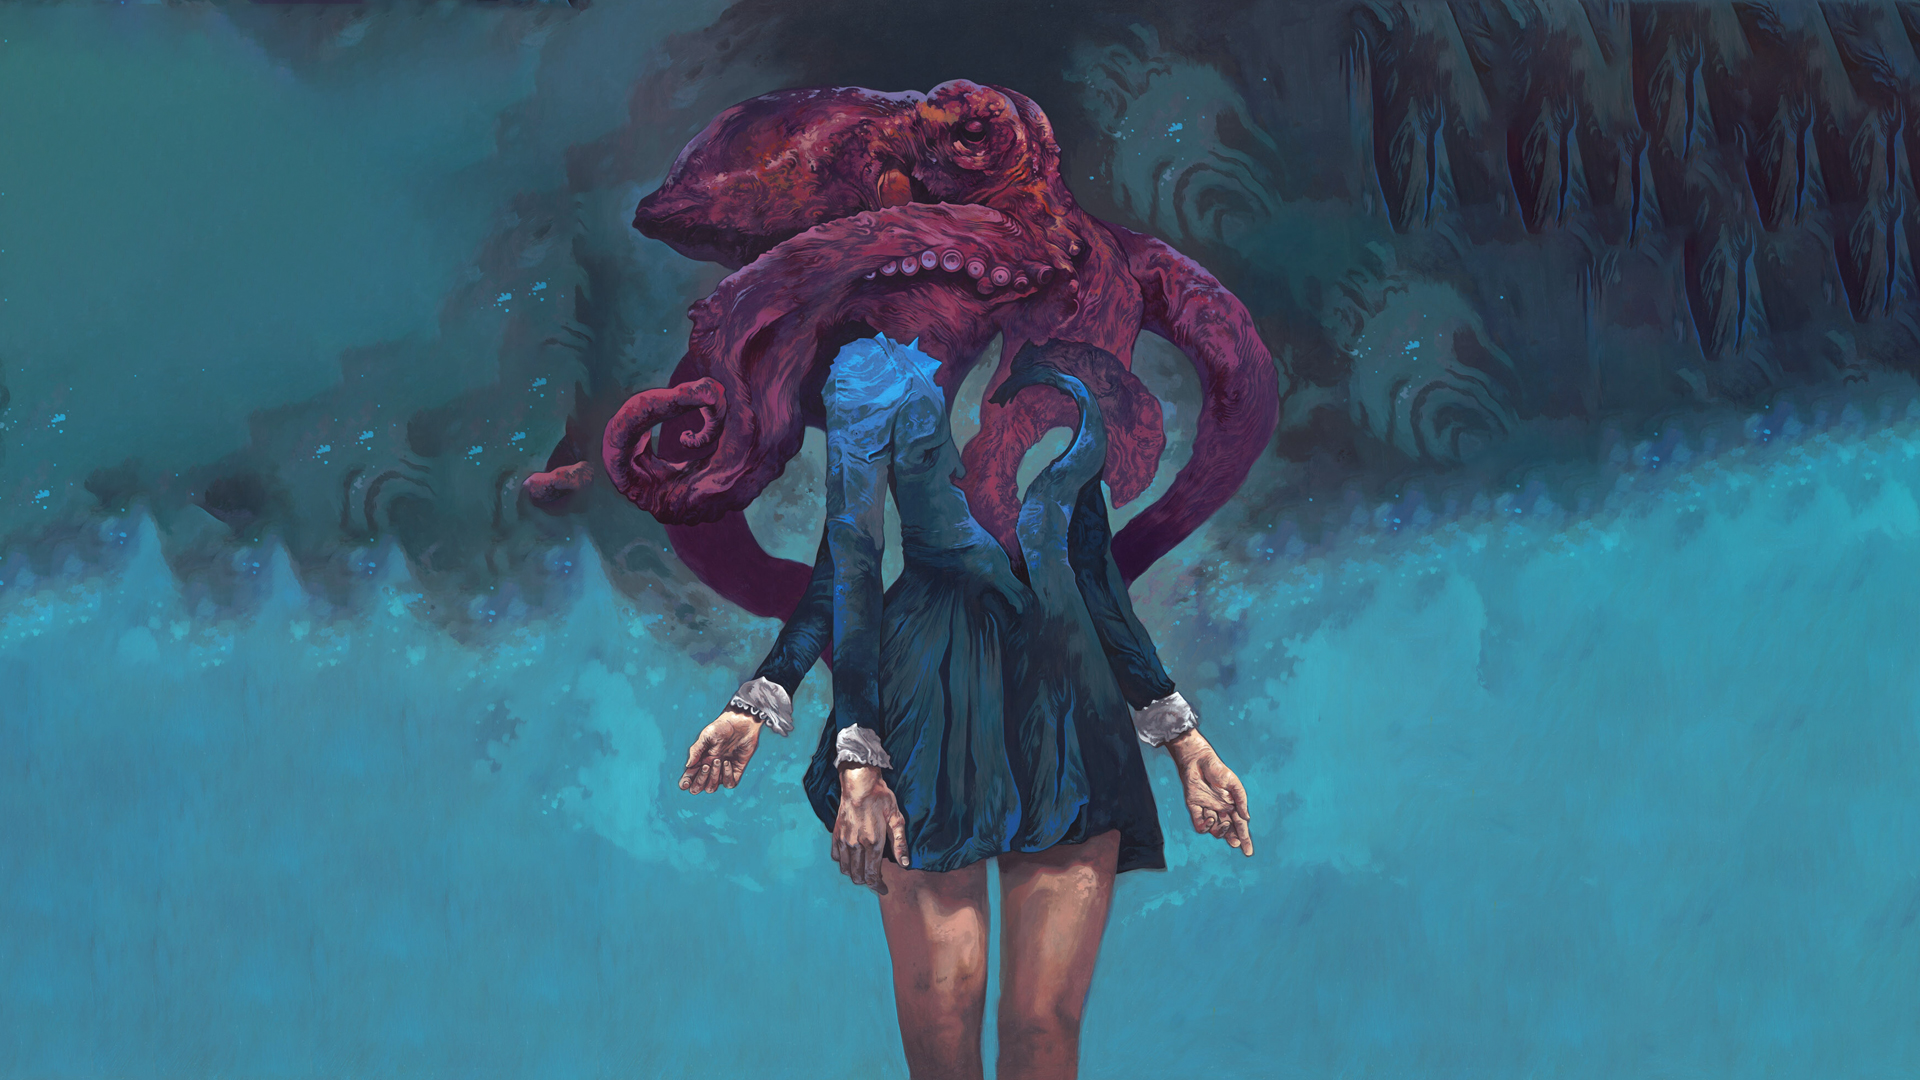 General 1920x1080 digital art artwork fantasy art women octopus black anno 19 Cthulhu